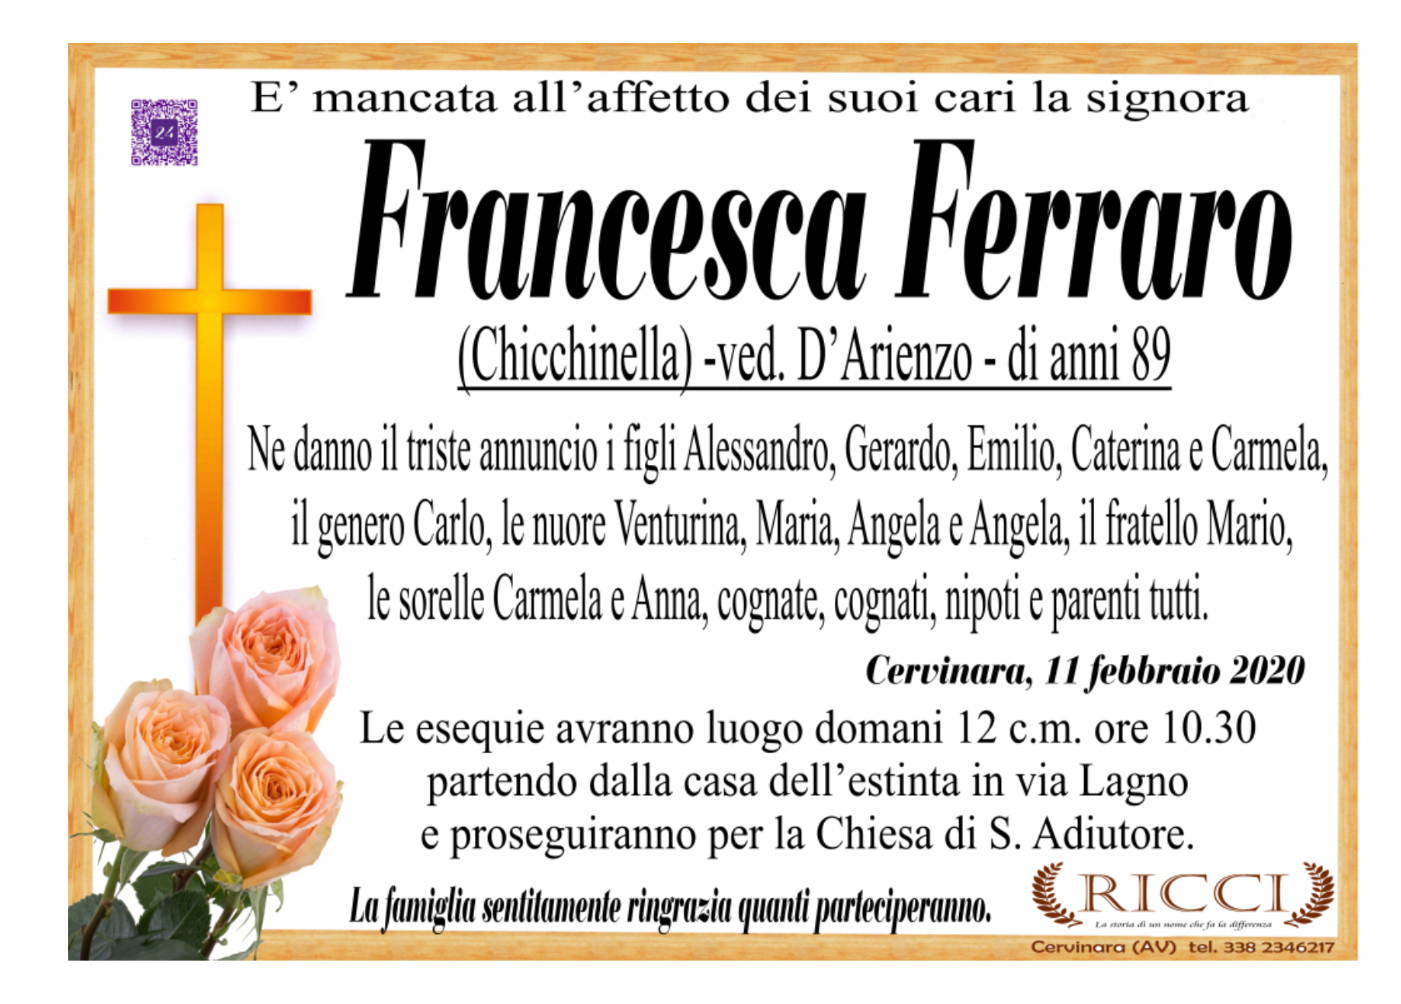 Francesca Ferraro